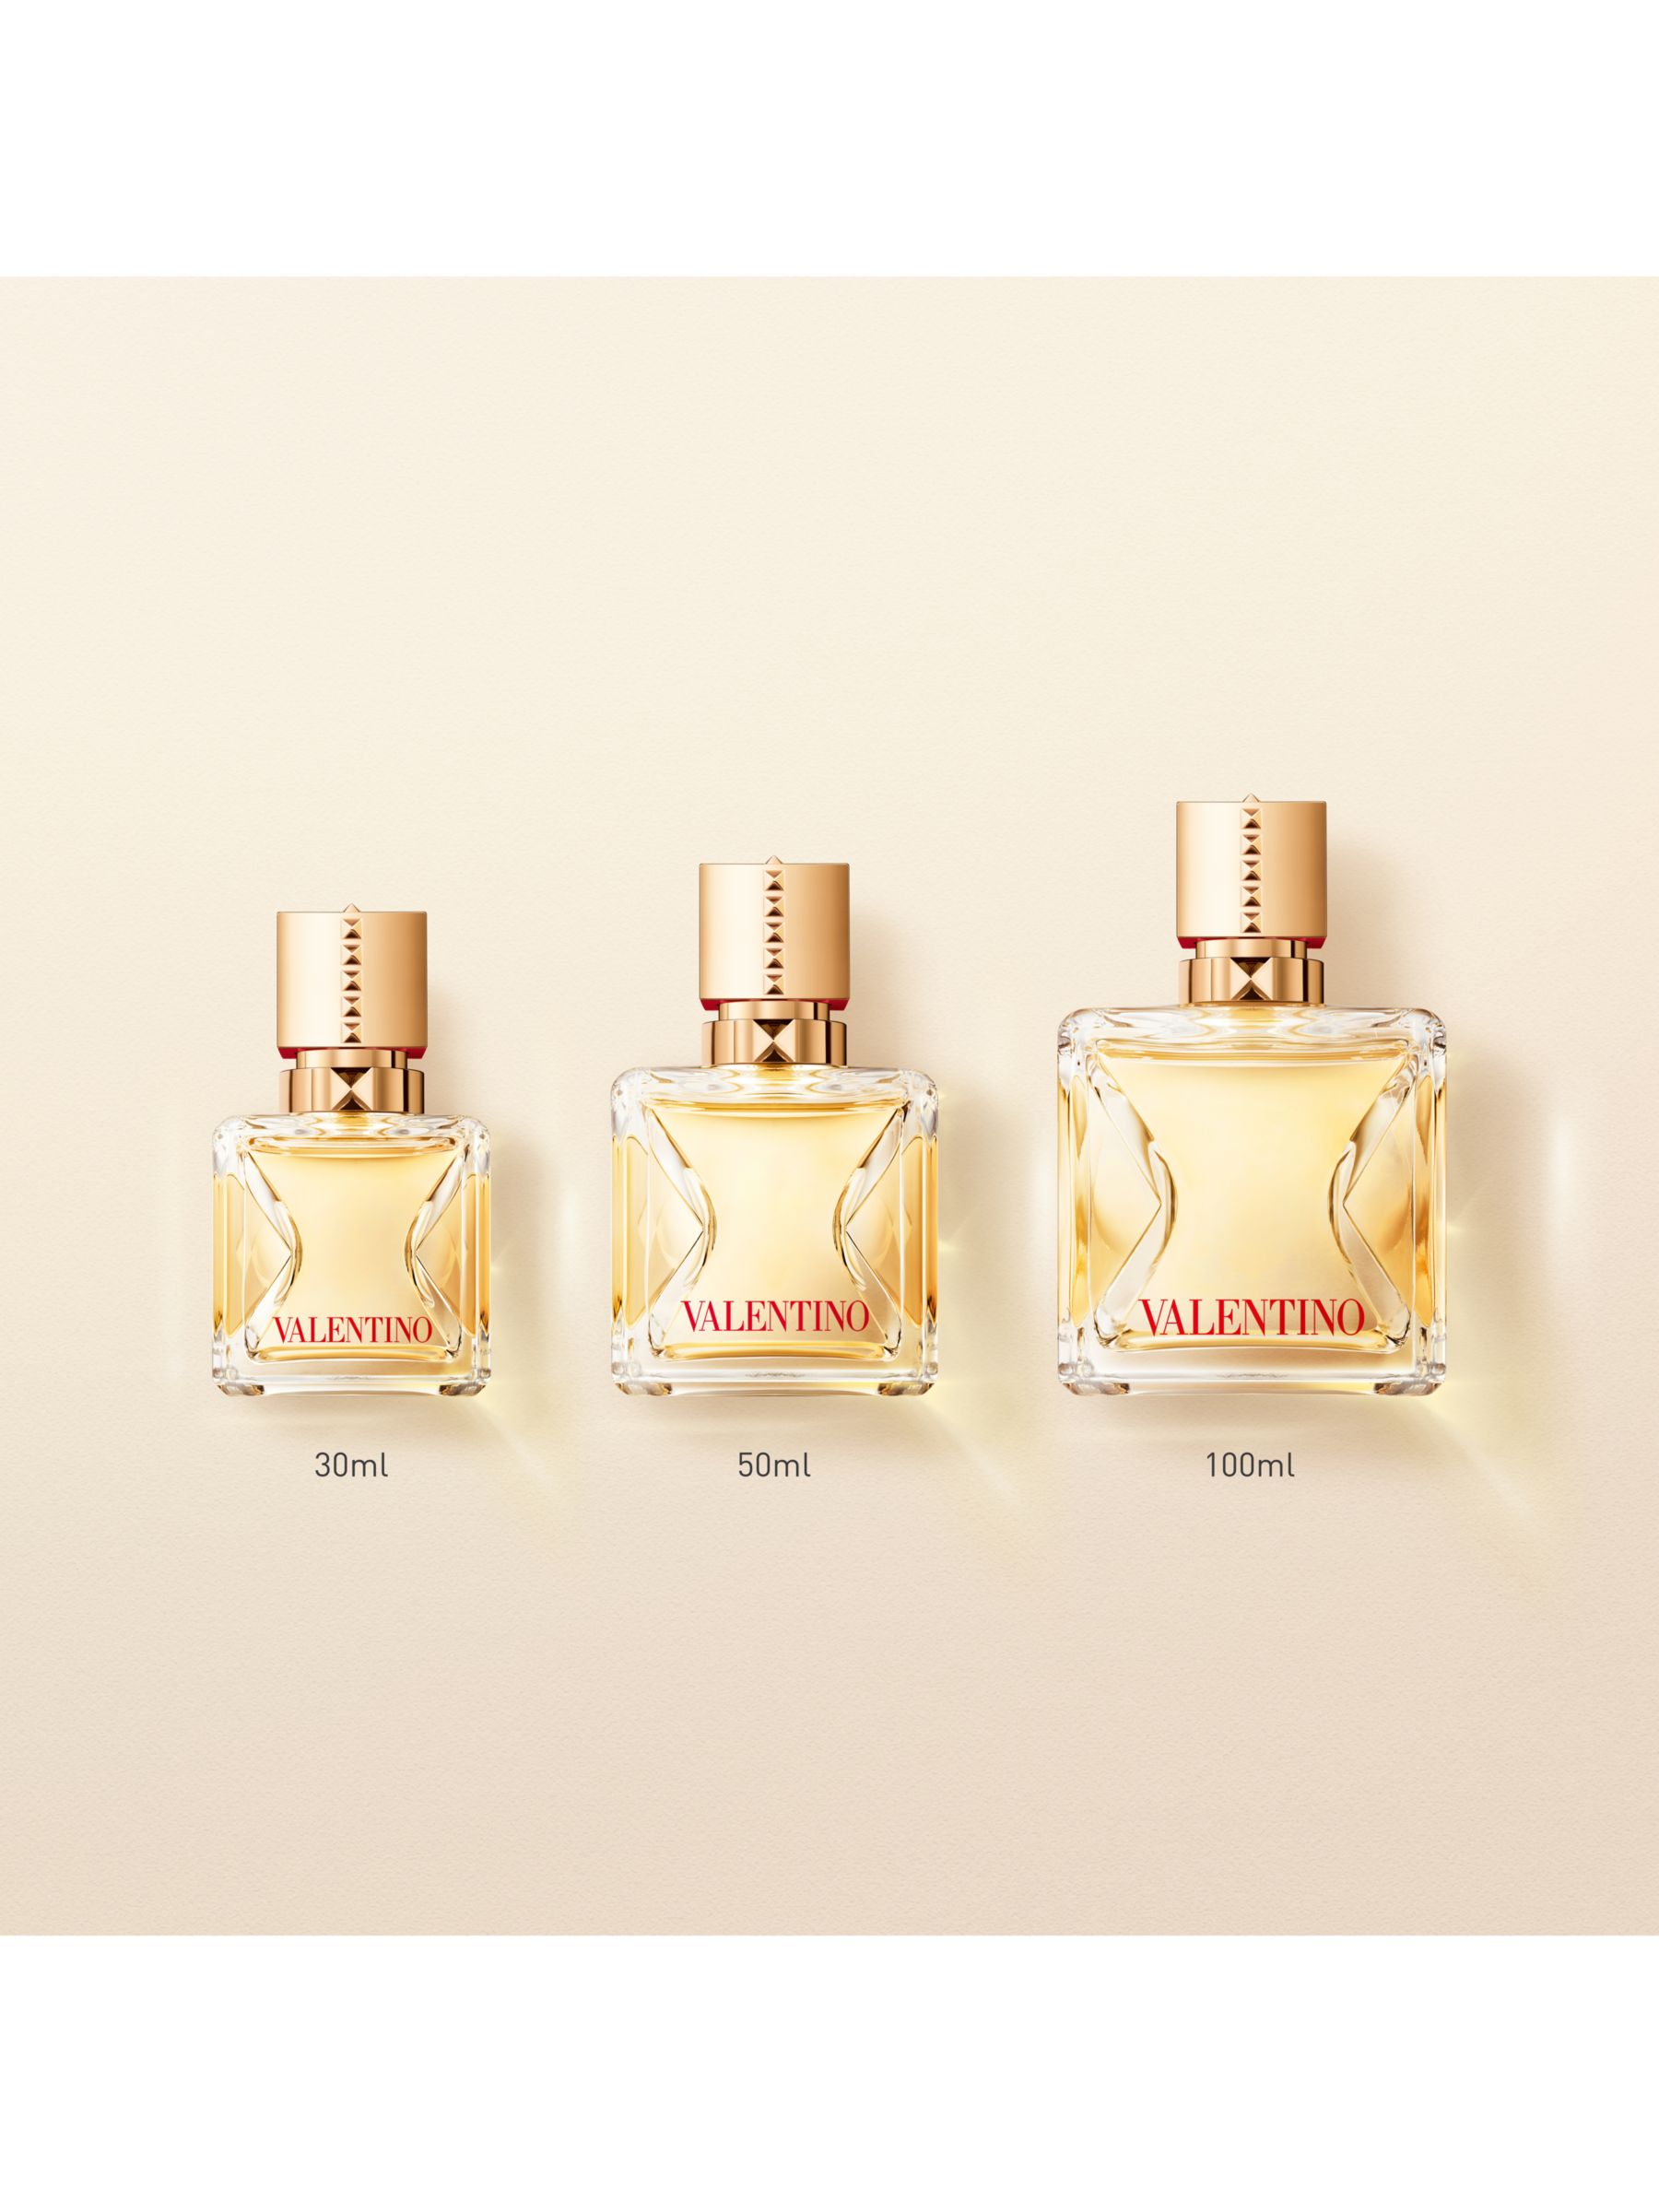 Valentino Voce Viva Eau de Parfum, 30ml 6